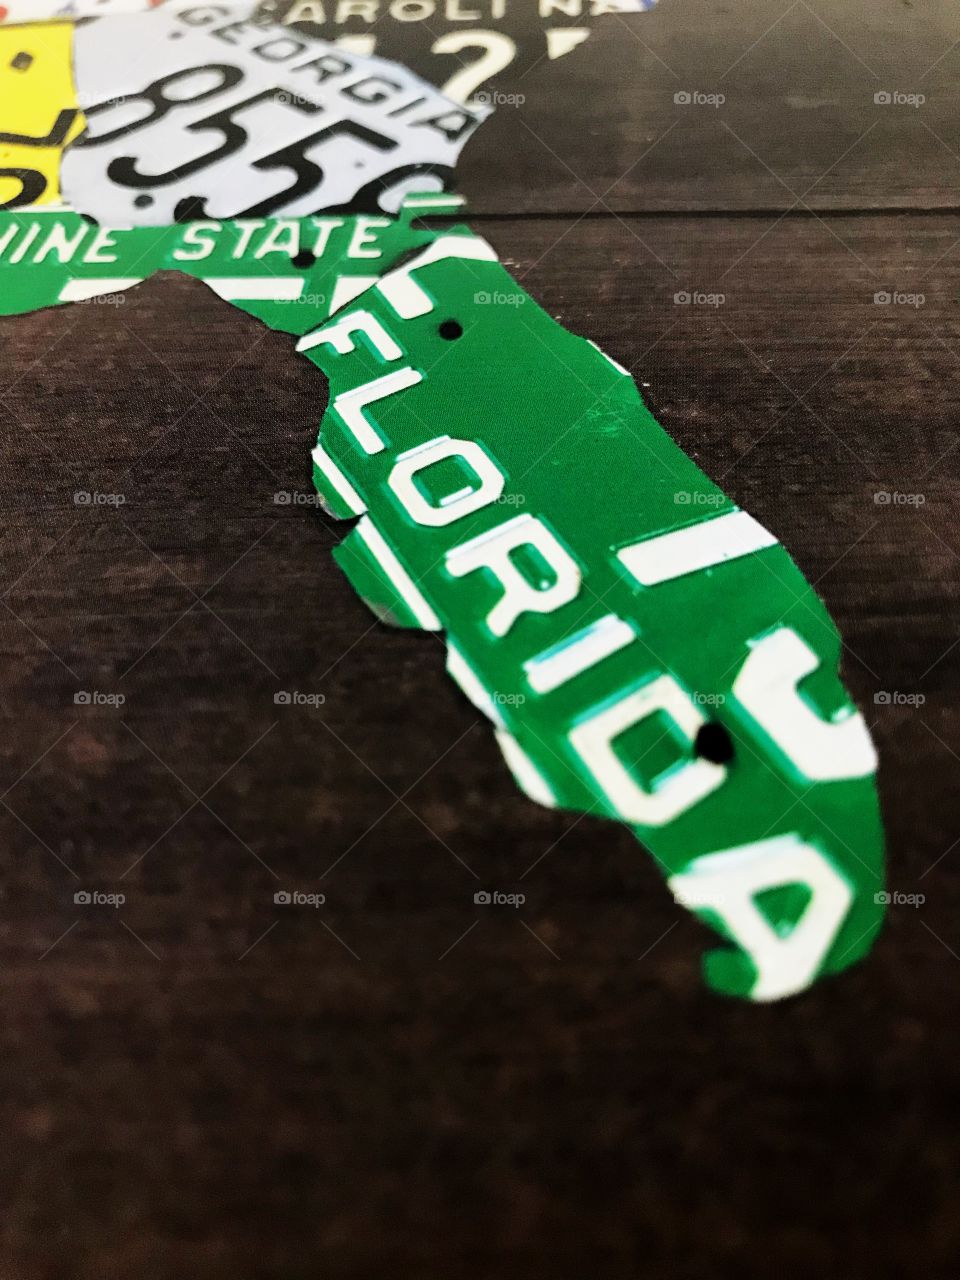 Florida state license plate artwork close up.